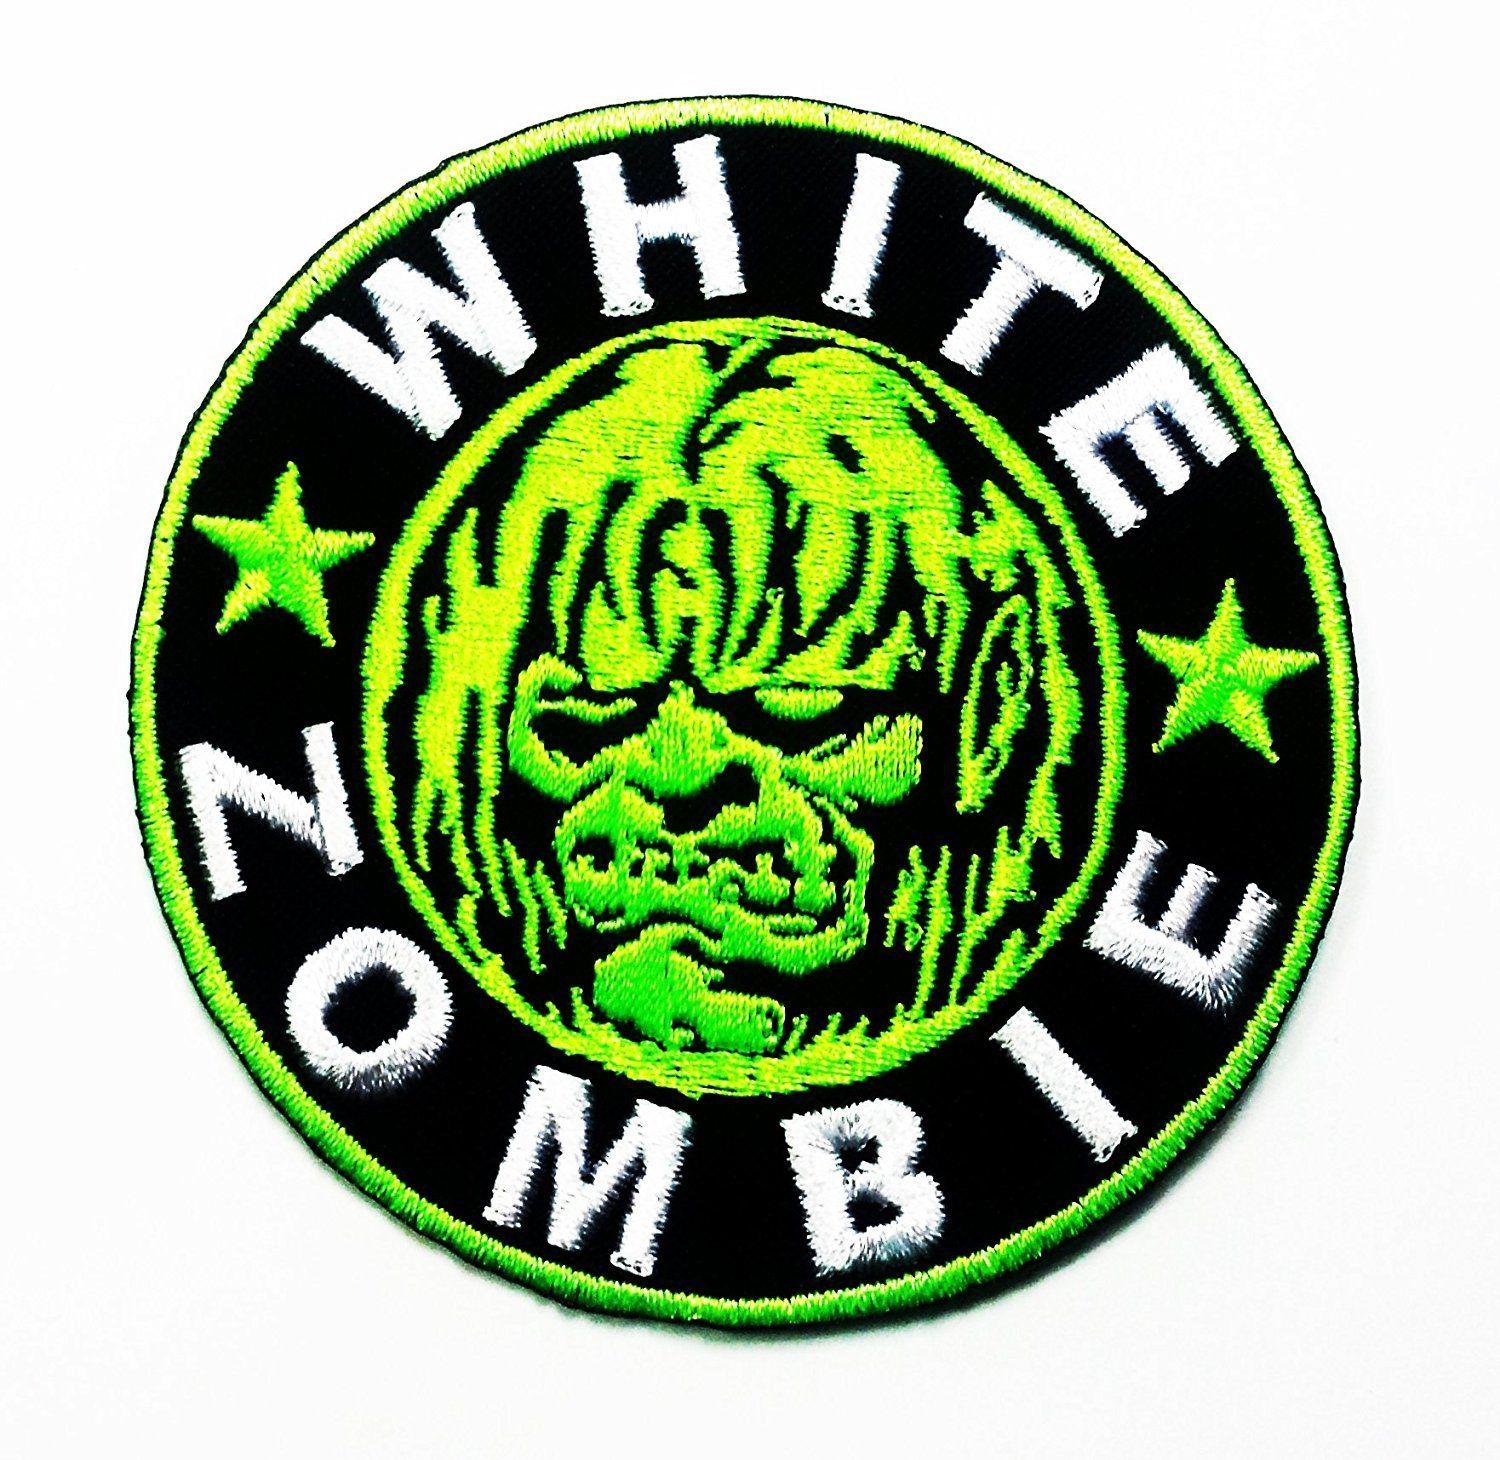 Punk Rock Logo - Amazon.com: White Zombie Heavy Metal Punk Rock Music Band Logo Patch ...